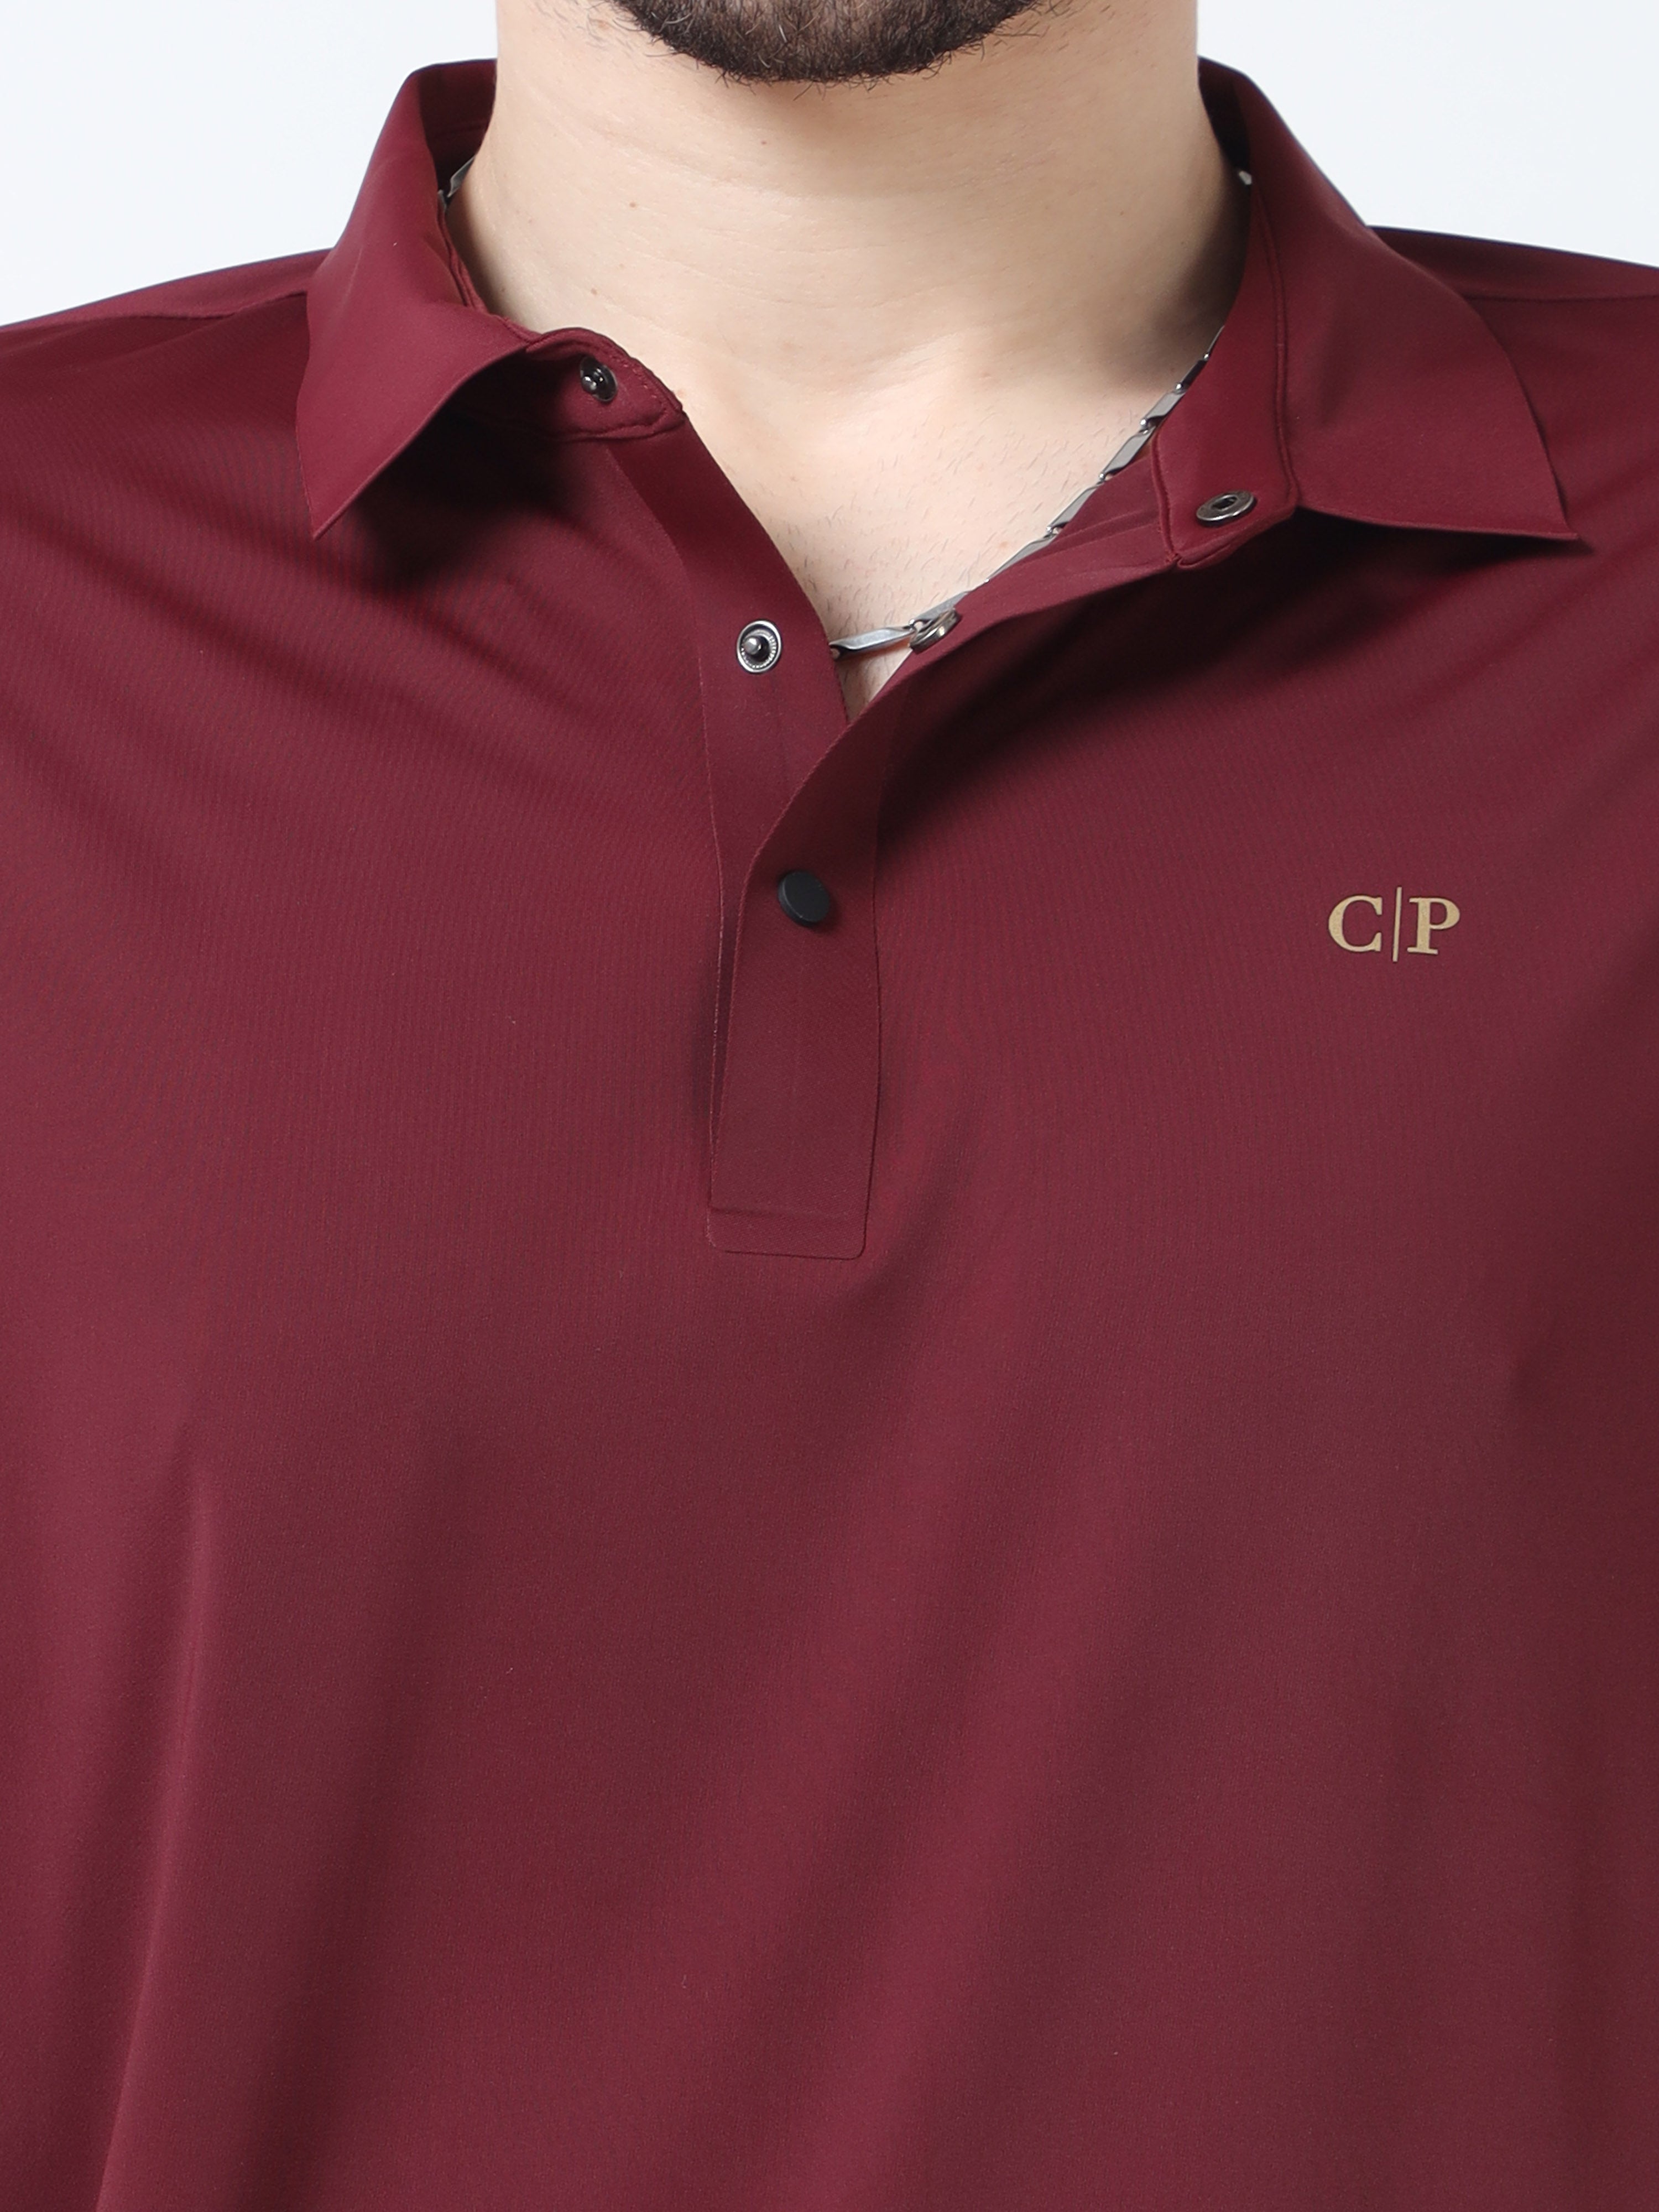 Classic Polo Men's Casual Solid Burgundy Half Sleeve T-Shirt | UNICO - 115 SF P